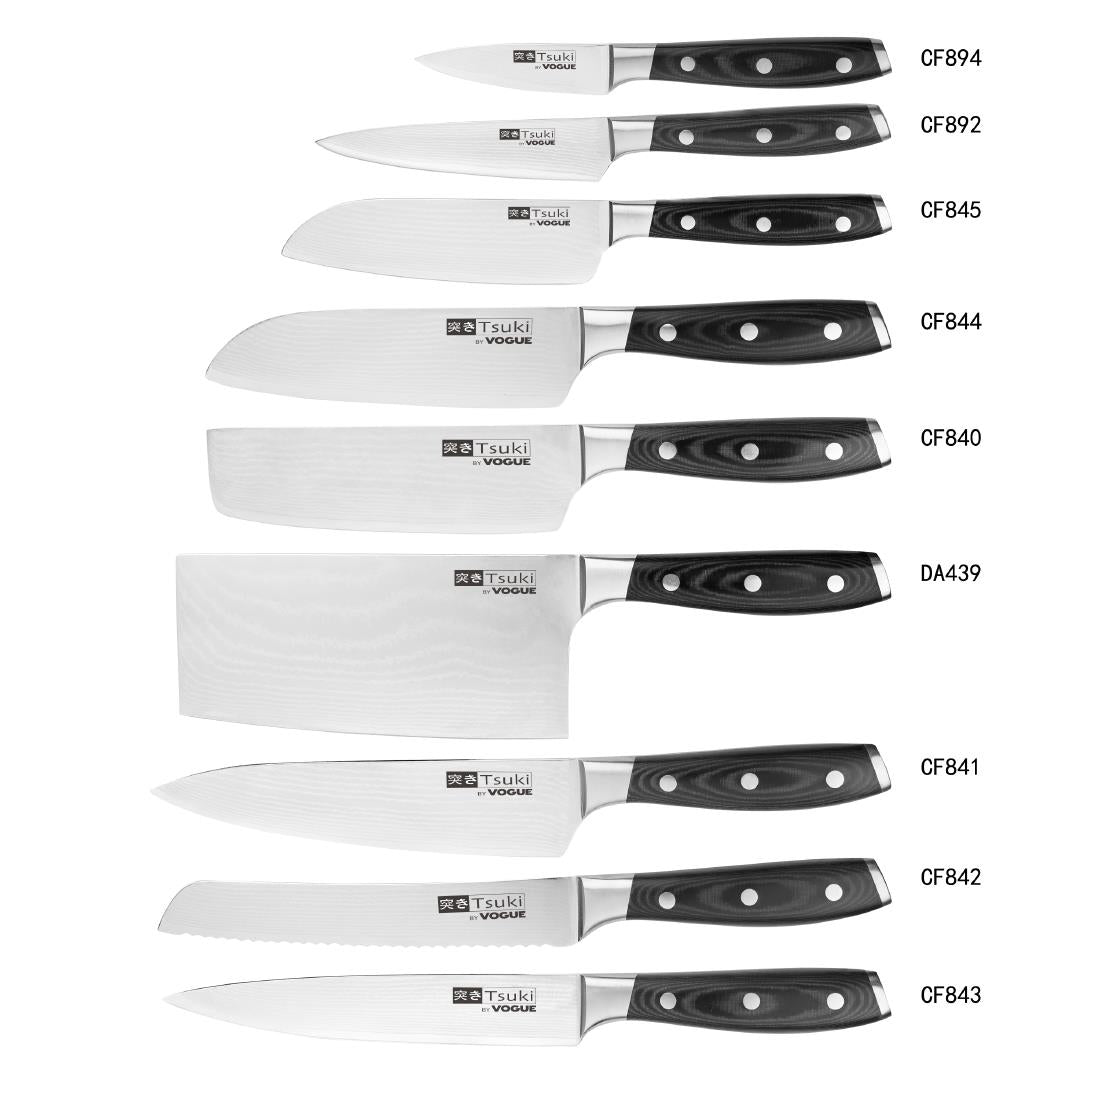 CF892 Tsuki Series 7 Utility Knife 12.5cm